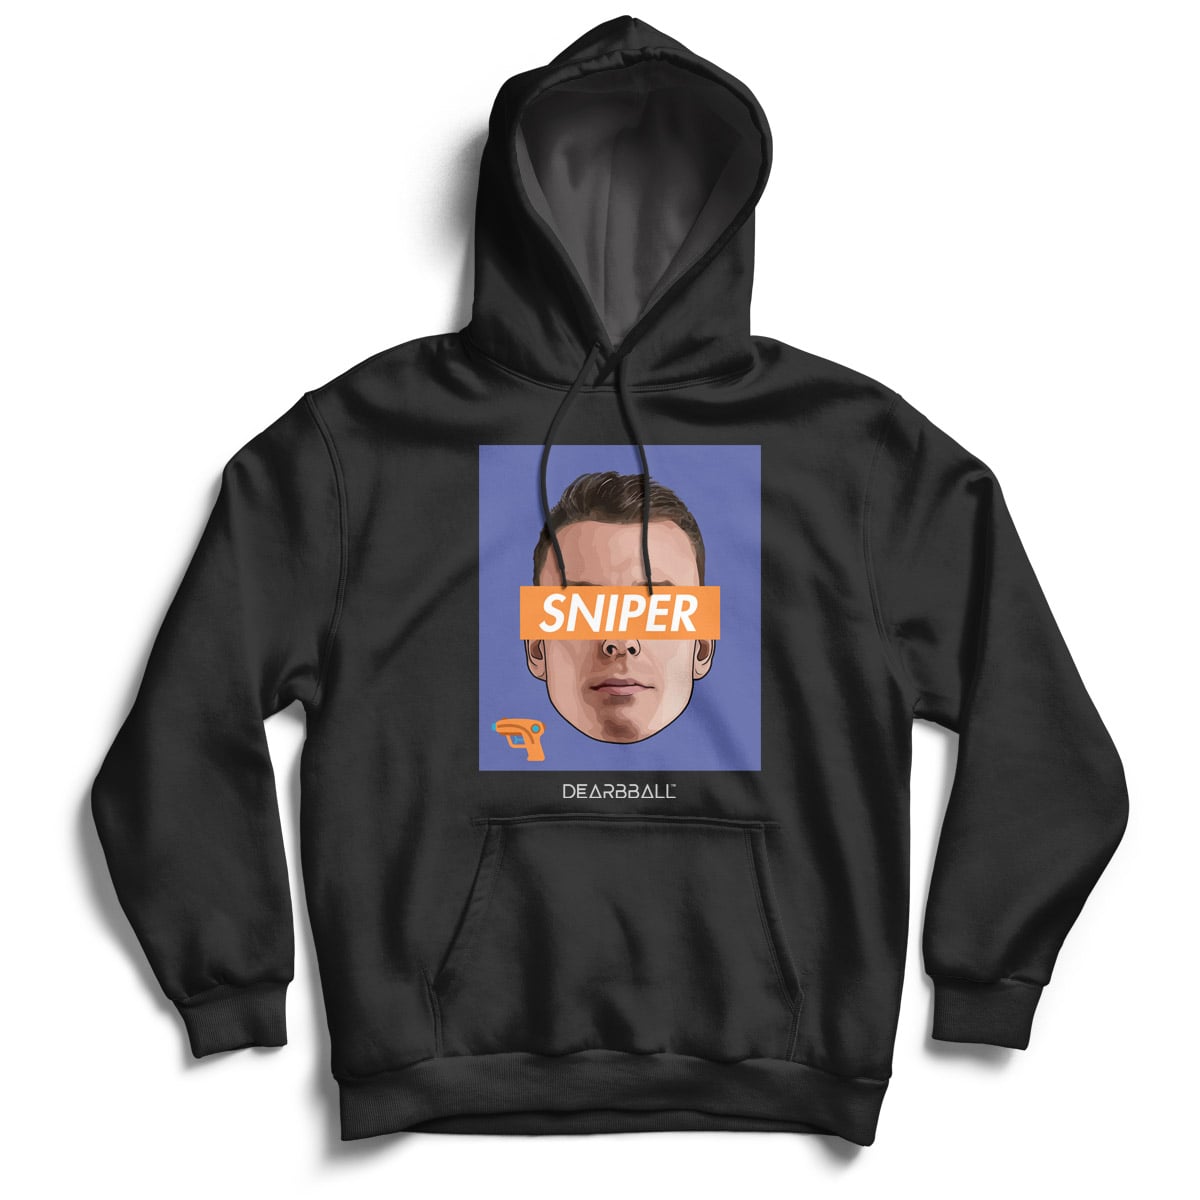 DearBBall Hooded Sweatshirt - SNIPER Orange Edition 